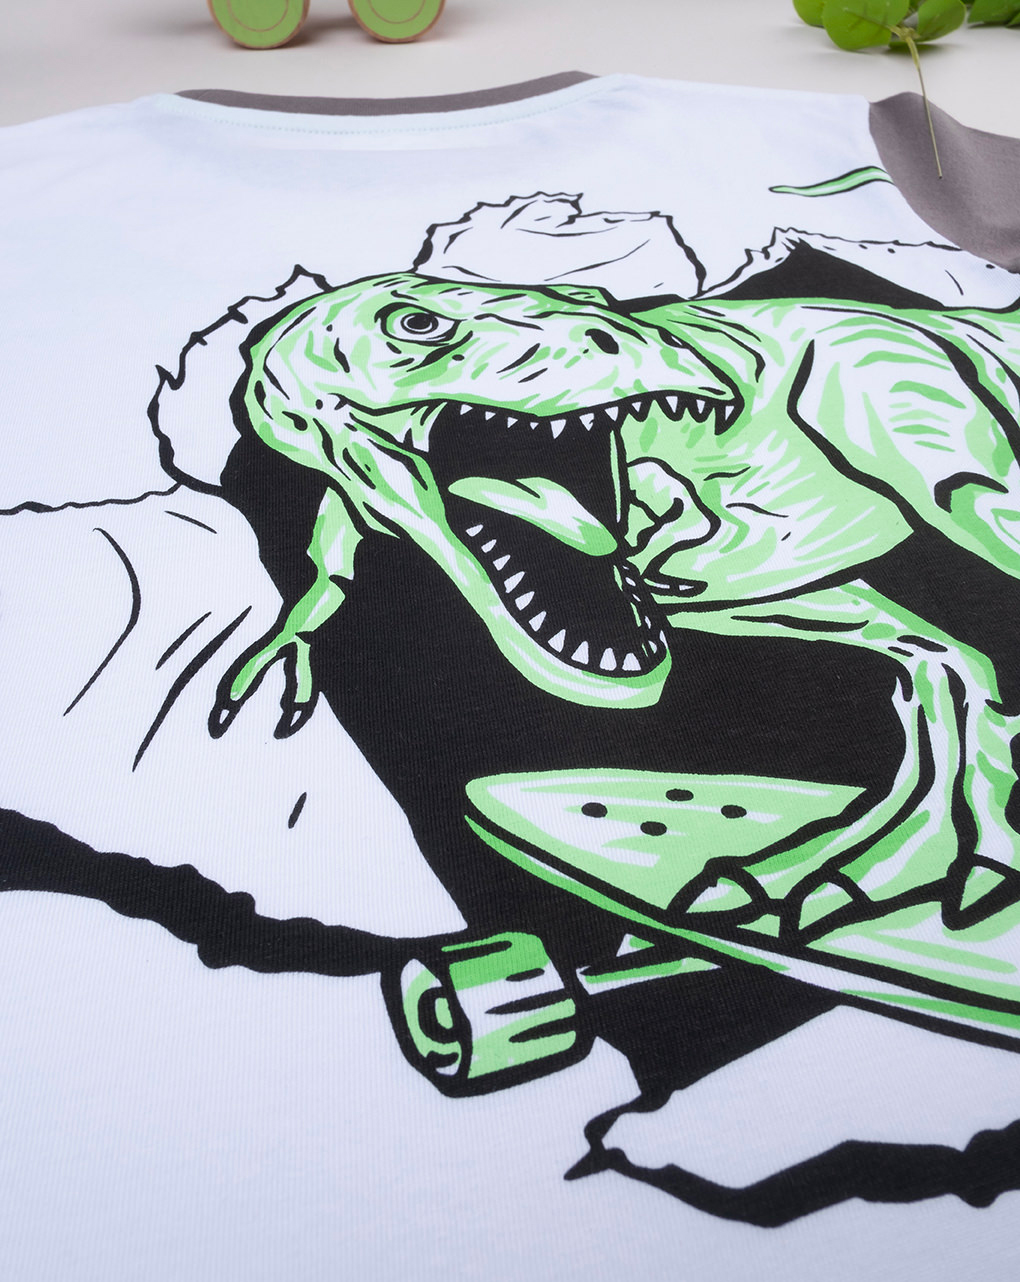 Camiseta de media manga "t-rex - Prénatal